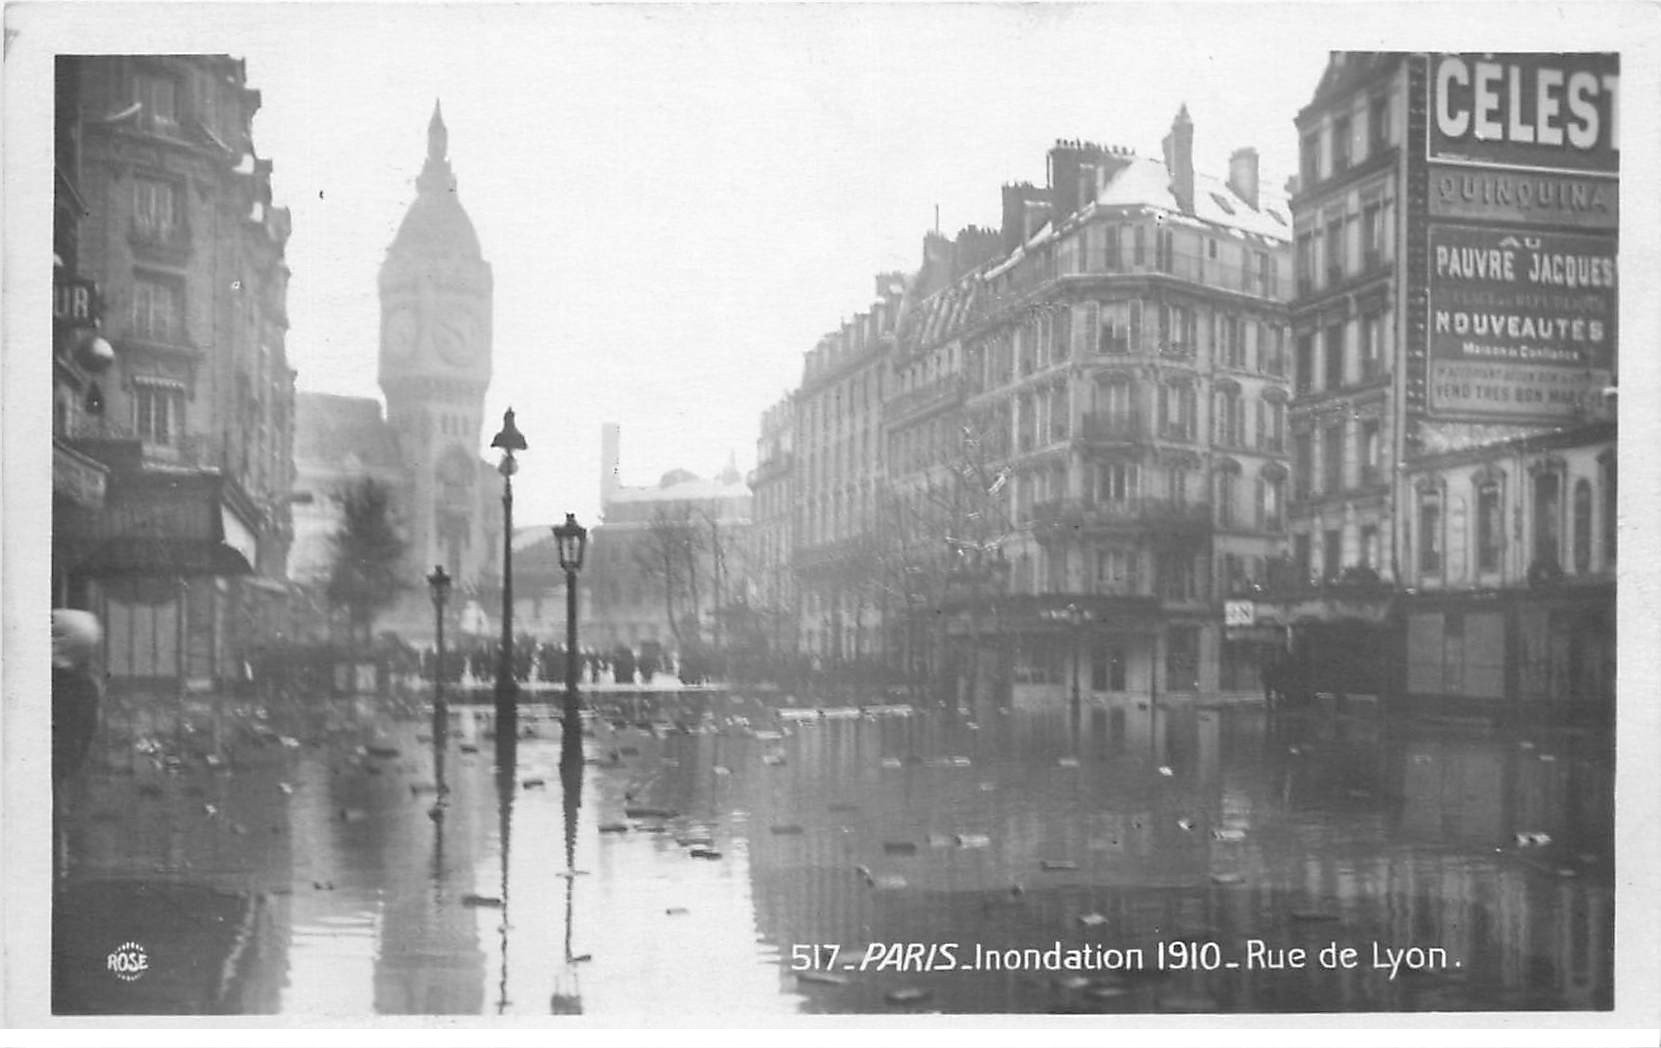 1910 INONDATION DE PARIS 12. Rue de Lyon. Edition Rose